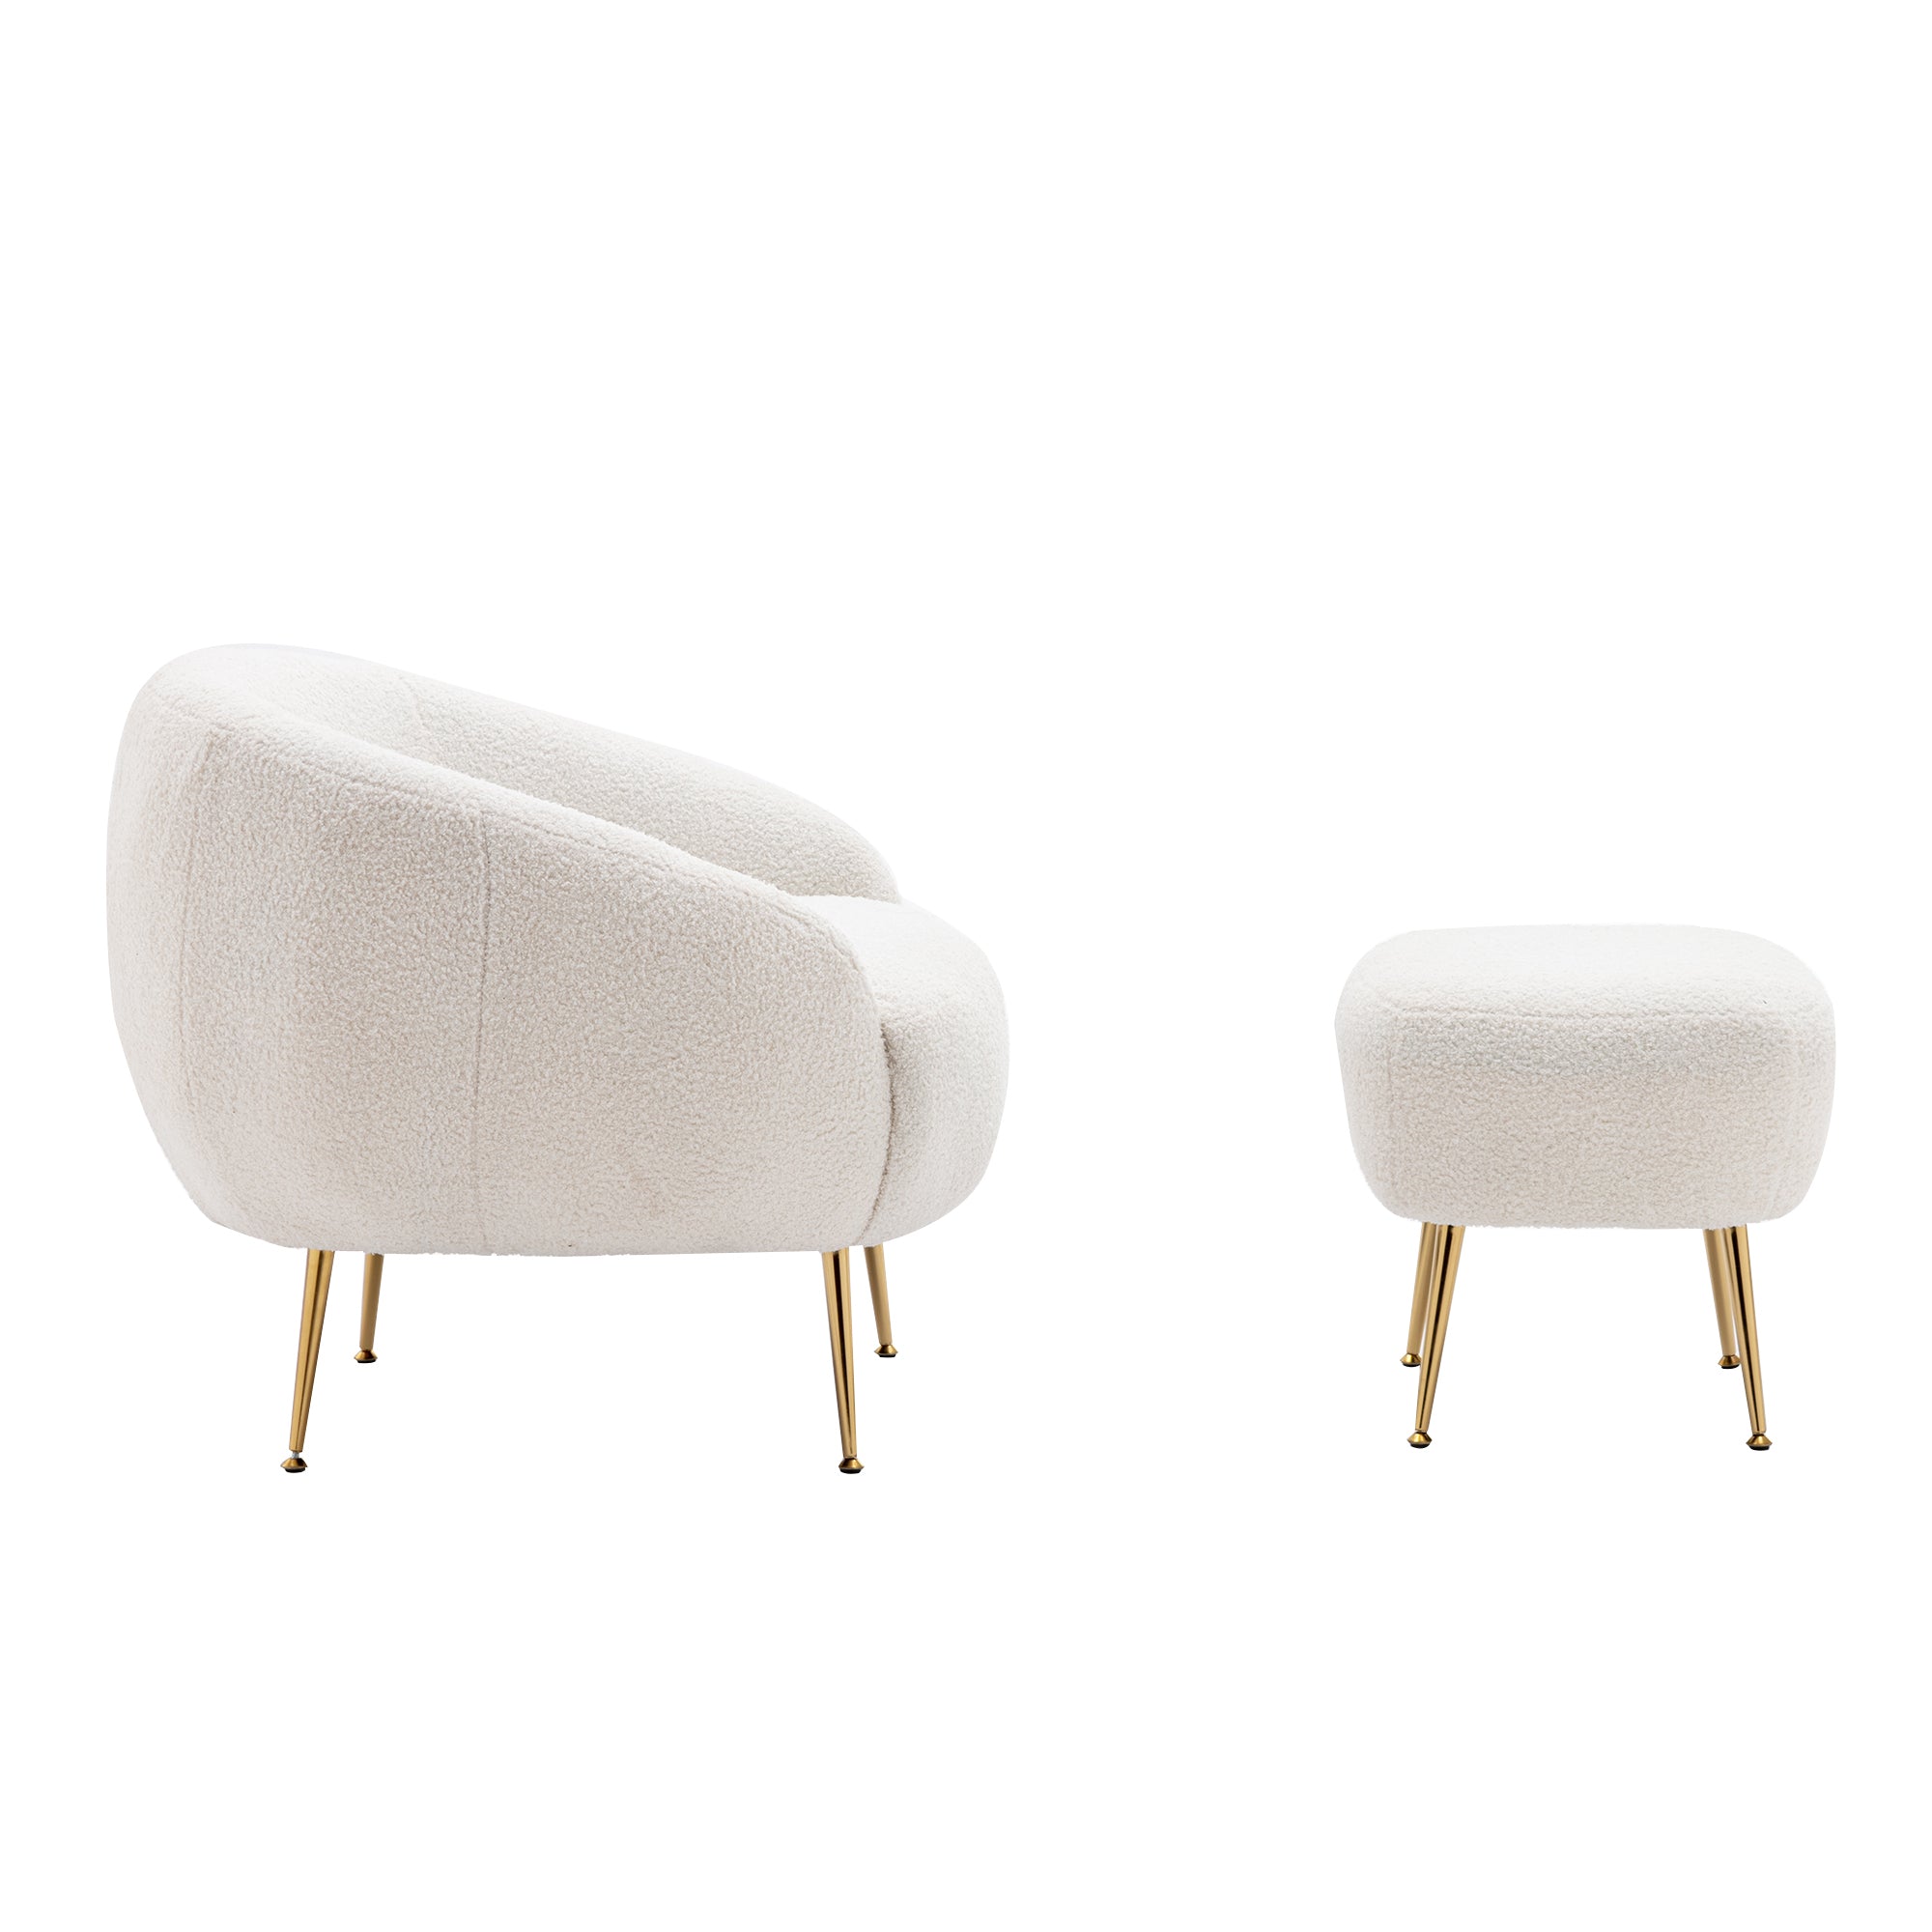 Orisfur. Modern Comfy Leisure Accent Chair, Teddy white-foam-altay velvet